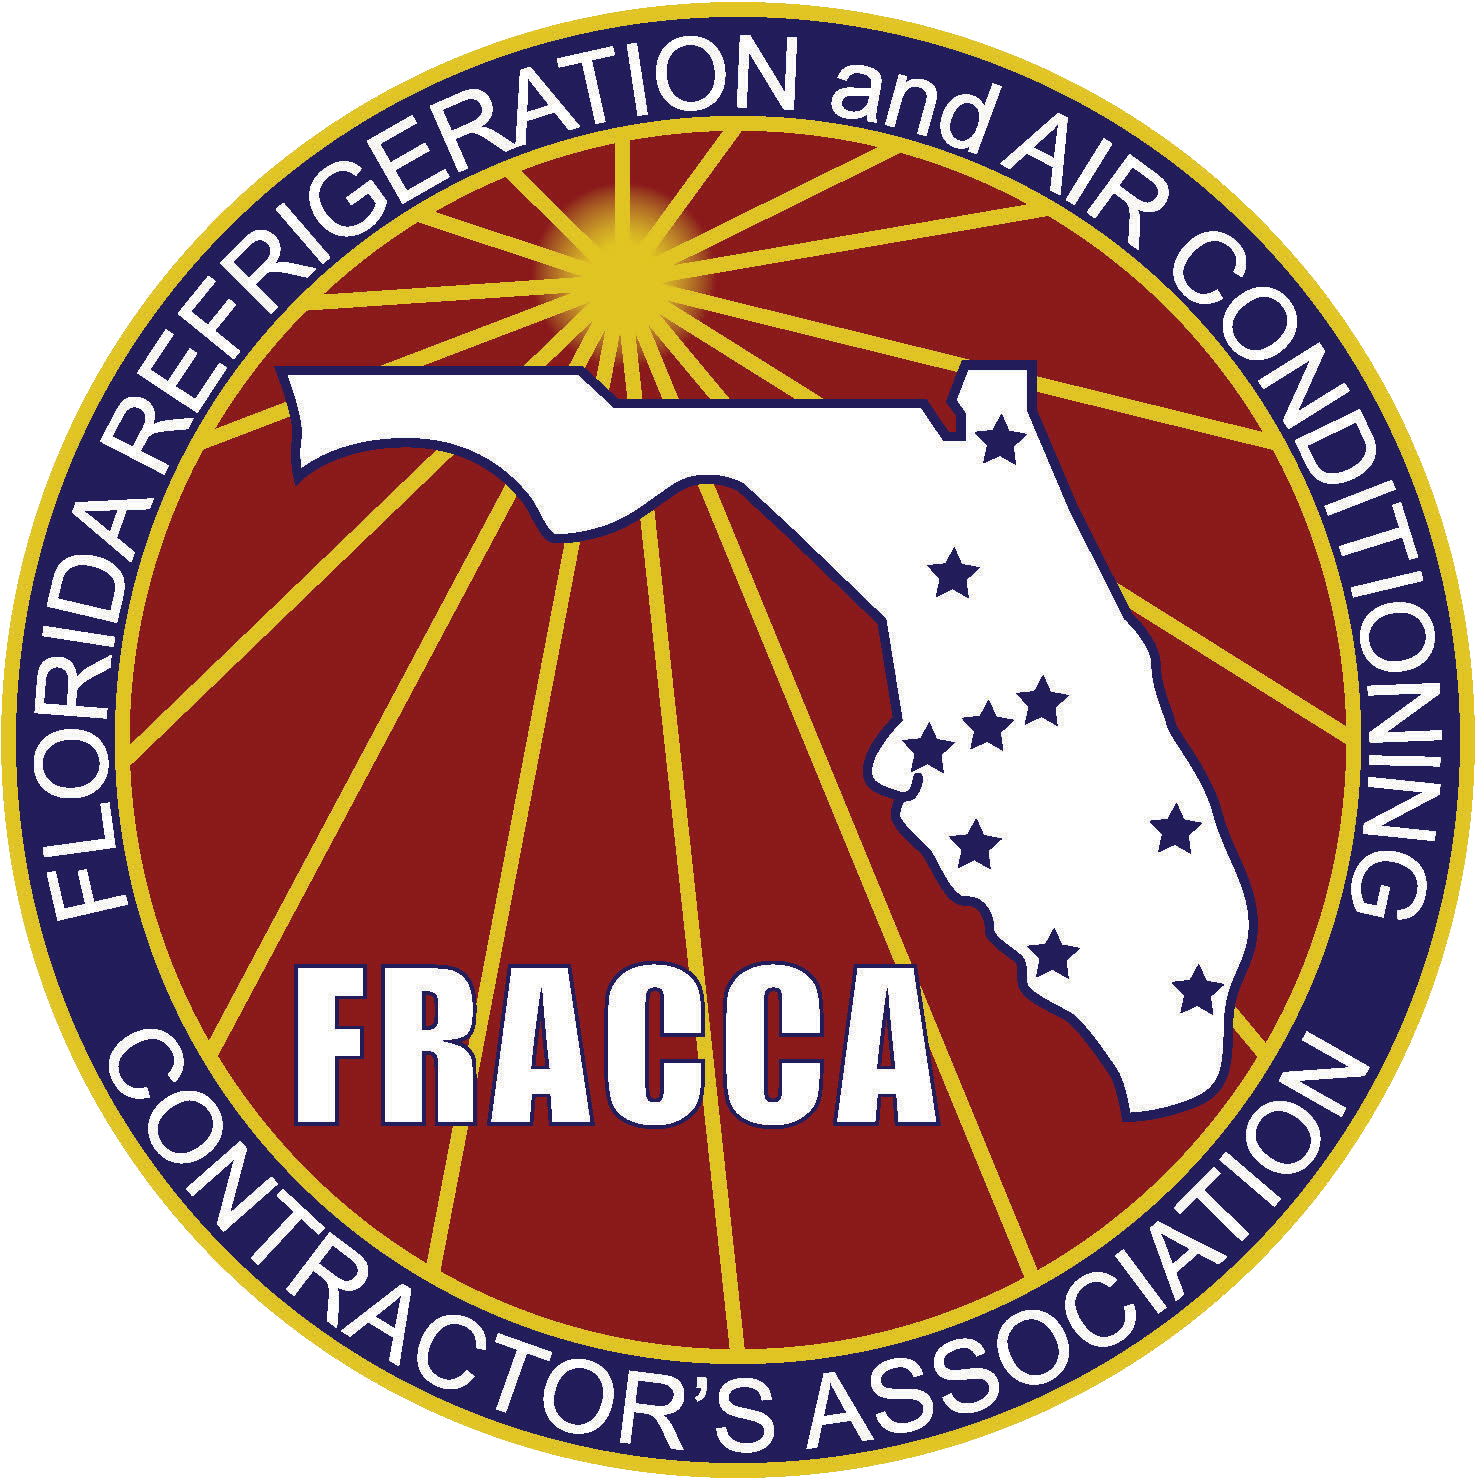 Florida Refrigeration & Air Conditioning Contractors Association logo